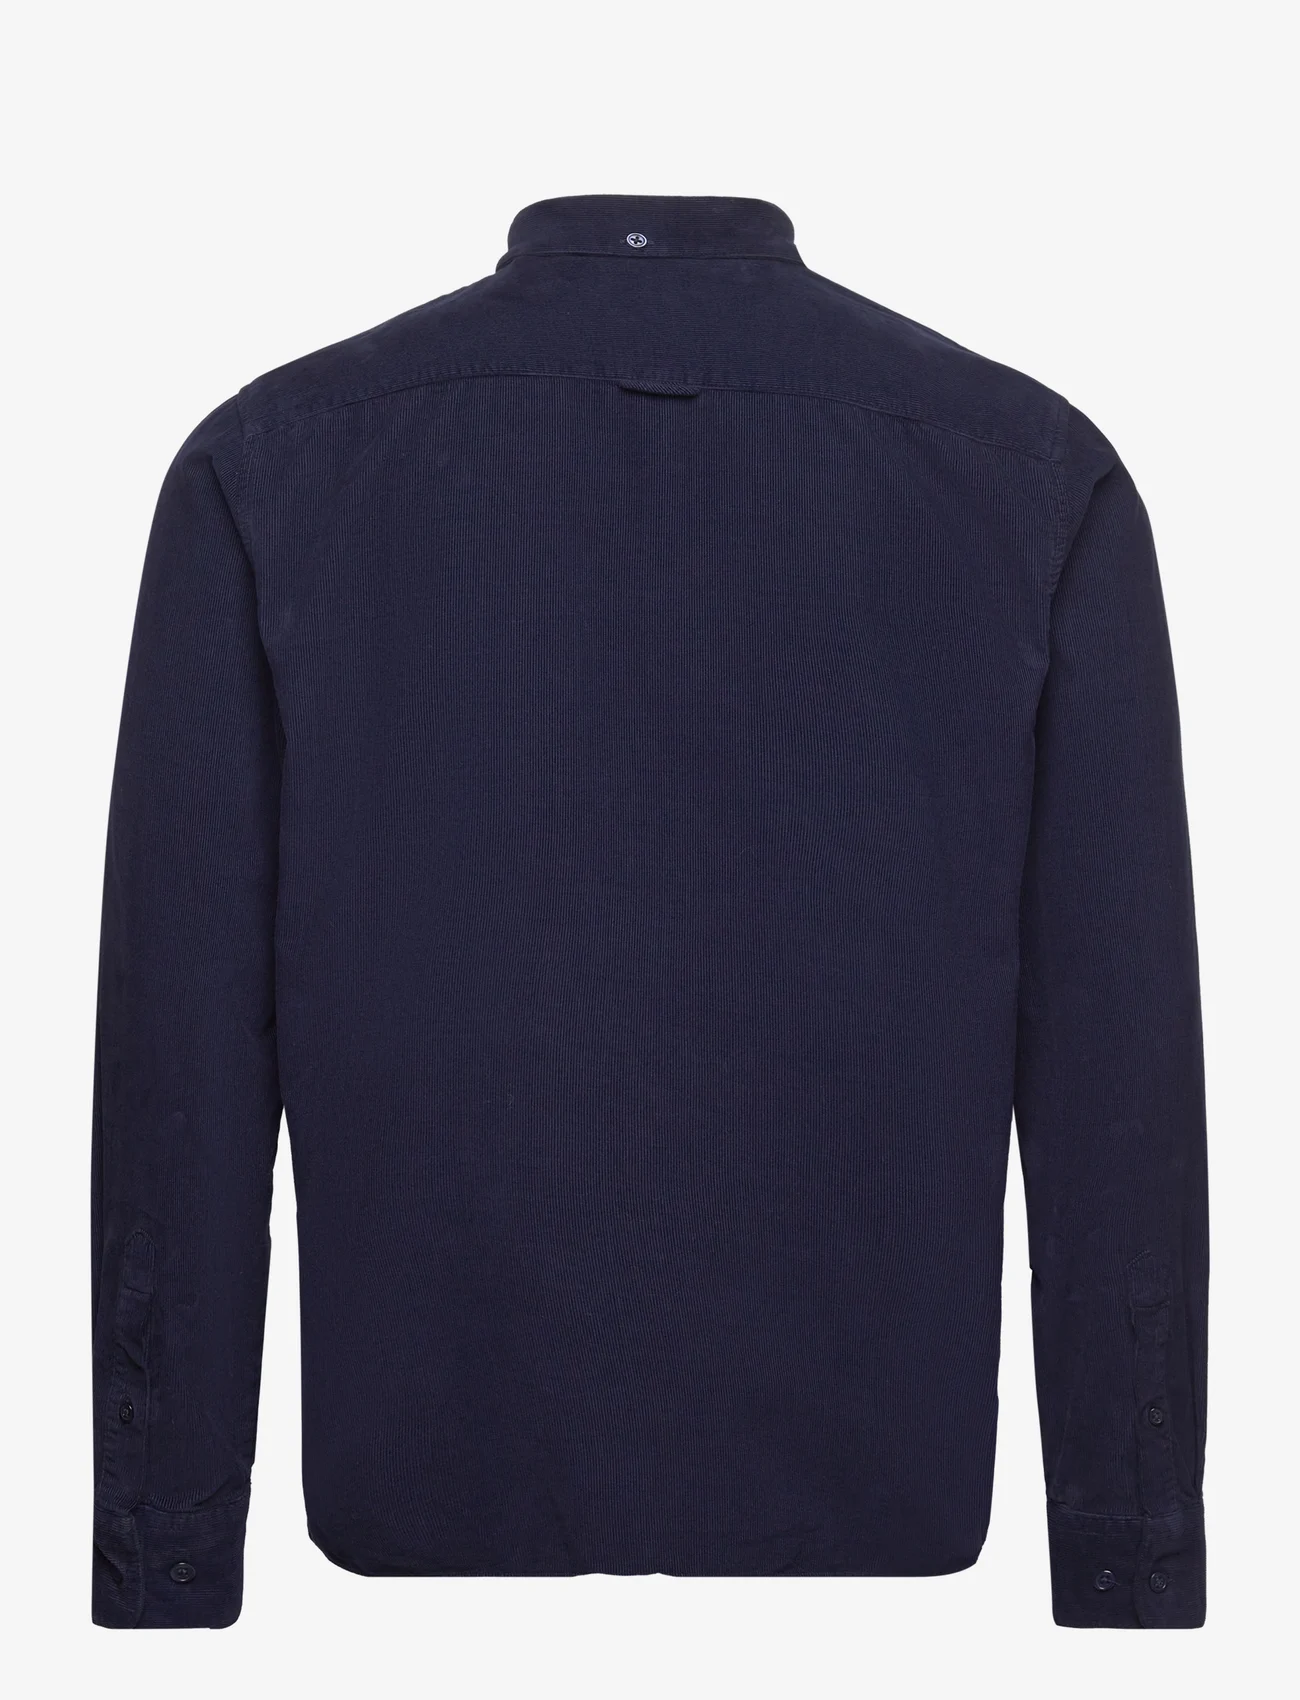 By Garment Makers - Vincent Corduroy Shirt GOTS - kordfløyelsskjorter - 3096 navy blazer - 1